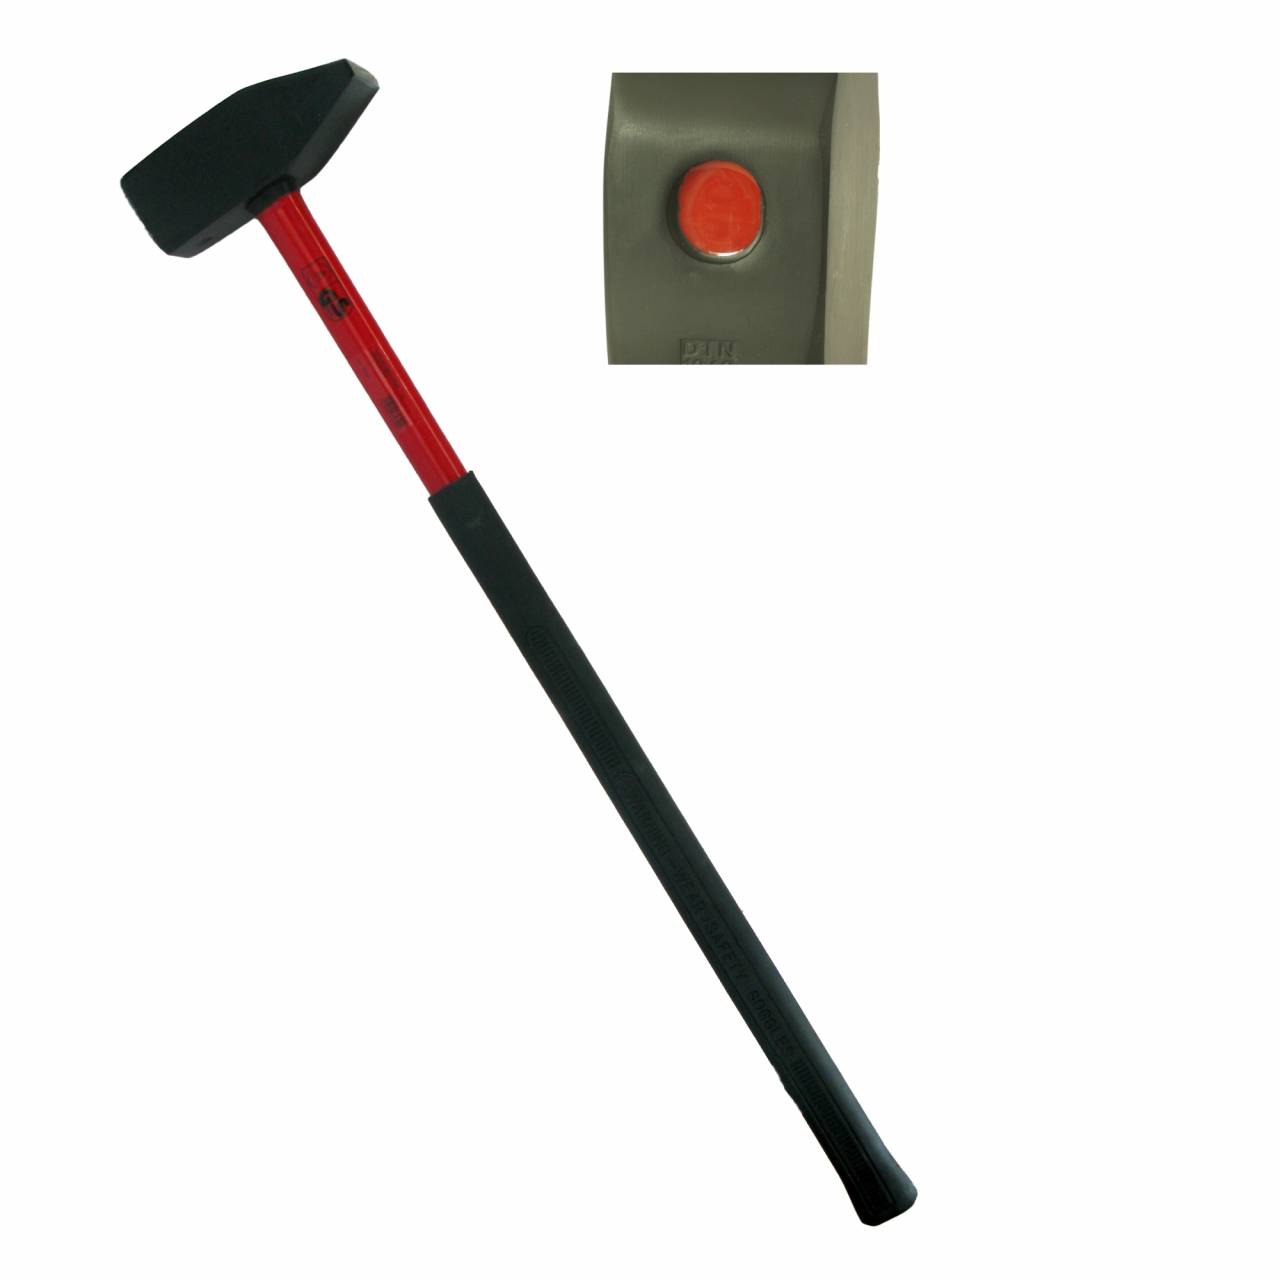 Vorschlaghammer 4,0 kg, Fiberglasstiel